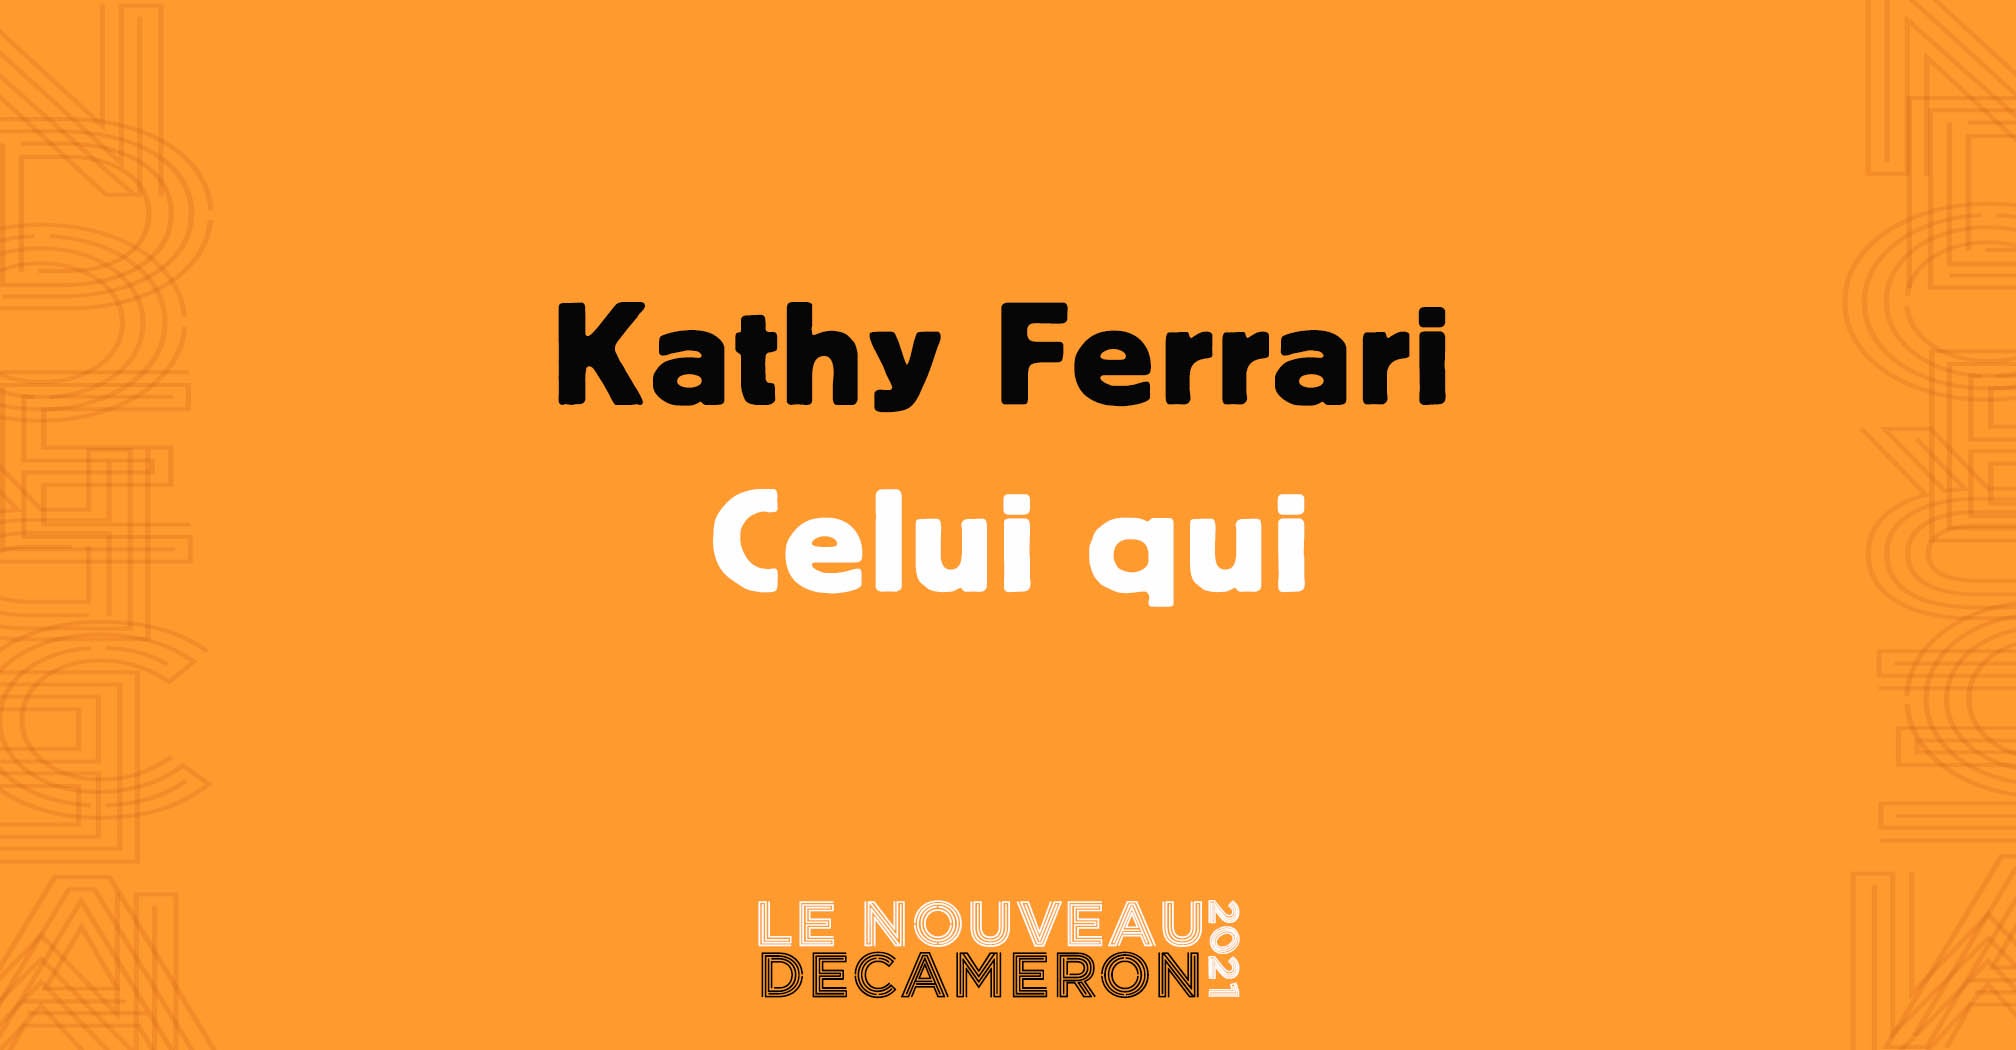 Kathy Ferrari - Celui qui